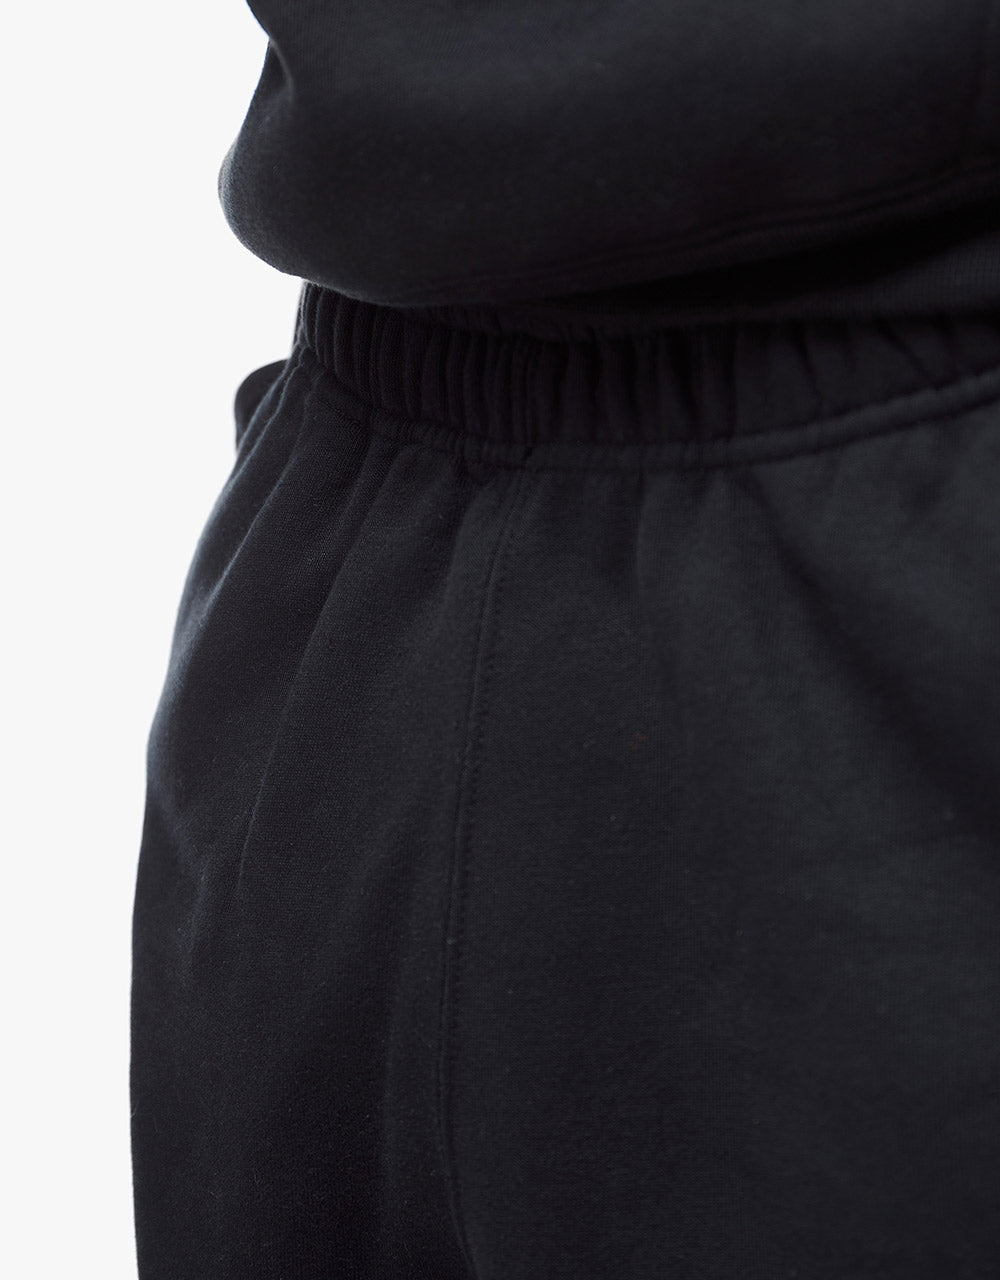 Nike Solo Swoosh Sweatpants - Black/White